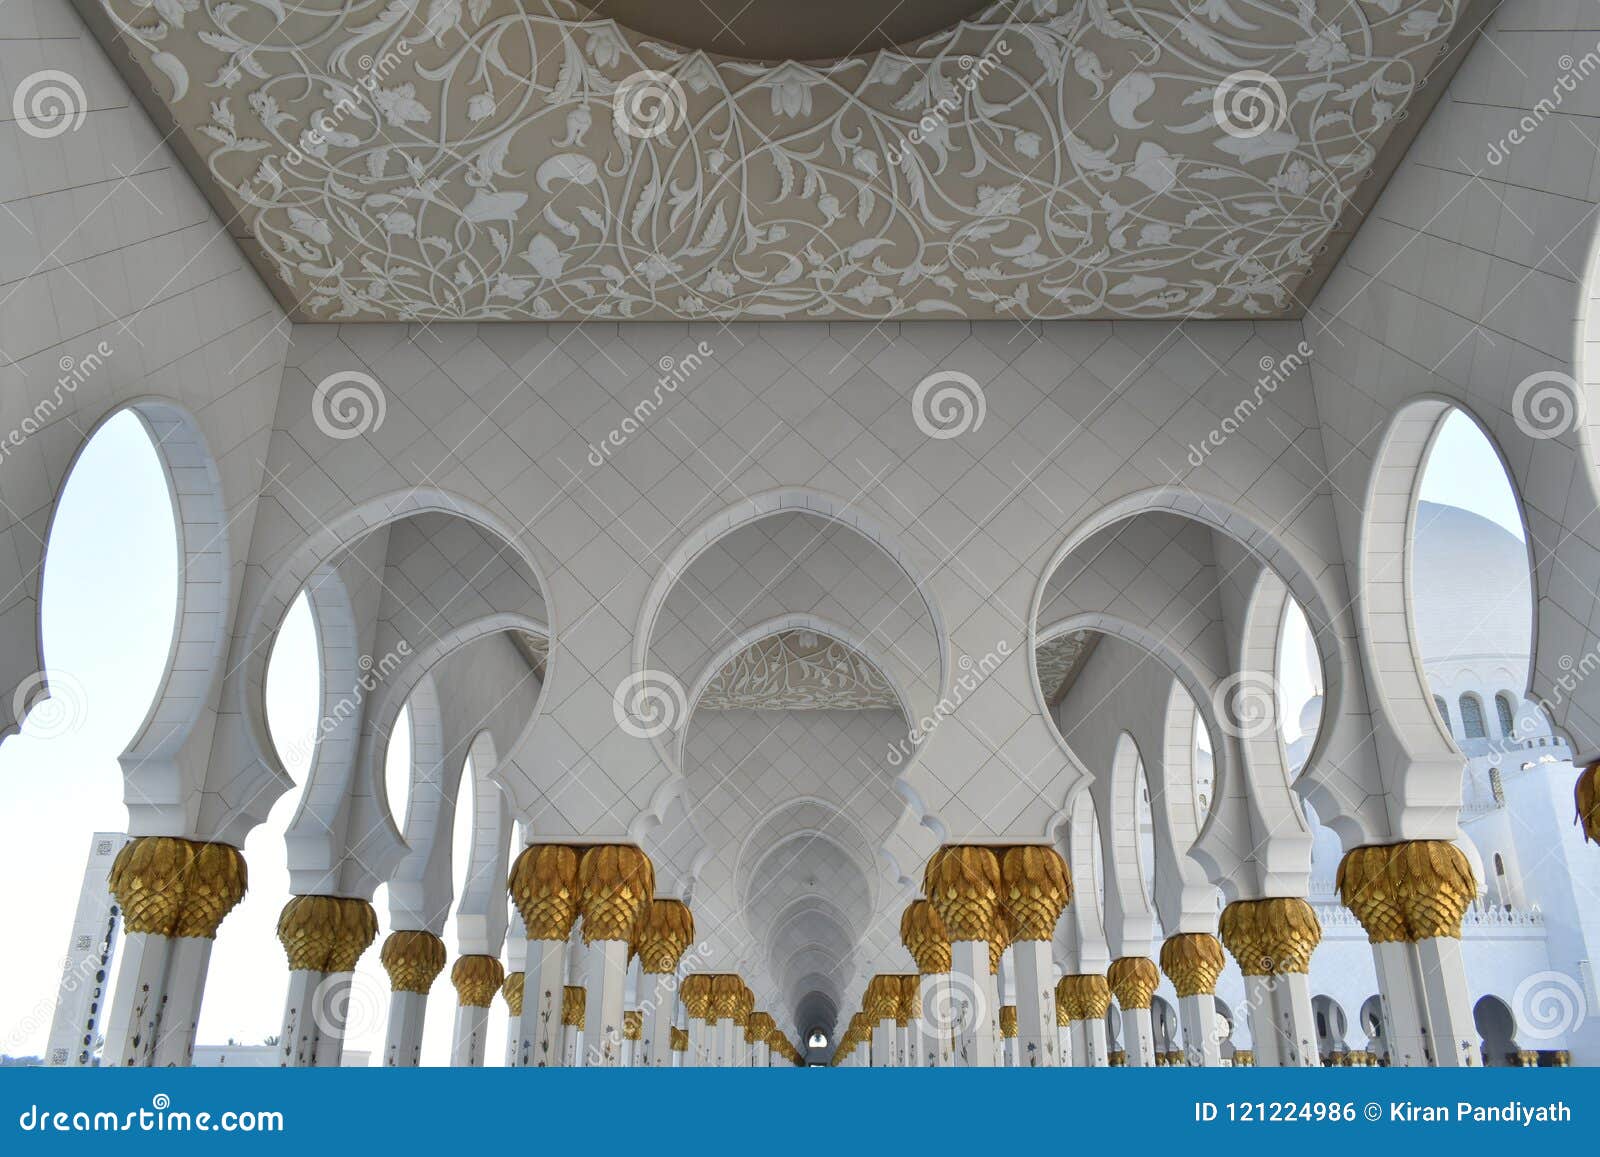 gold gilted columns sheikh zayed grand mosque